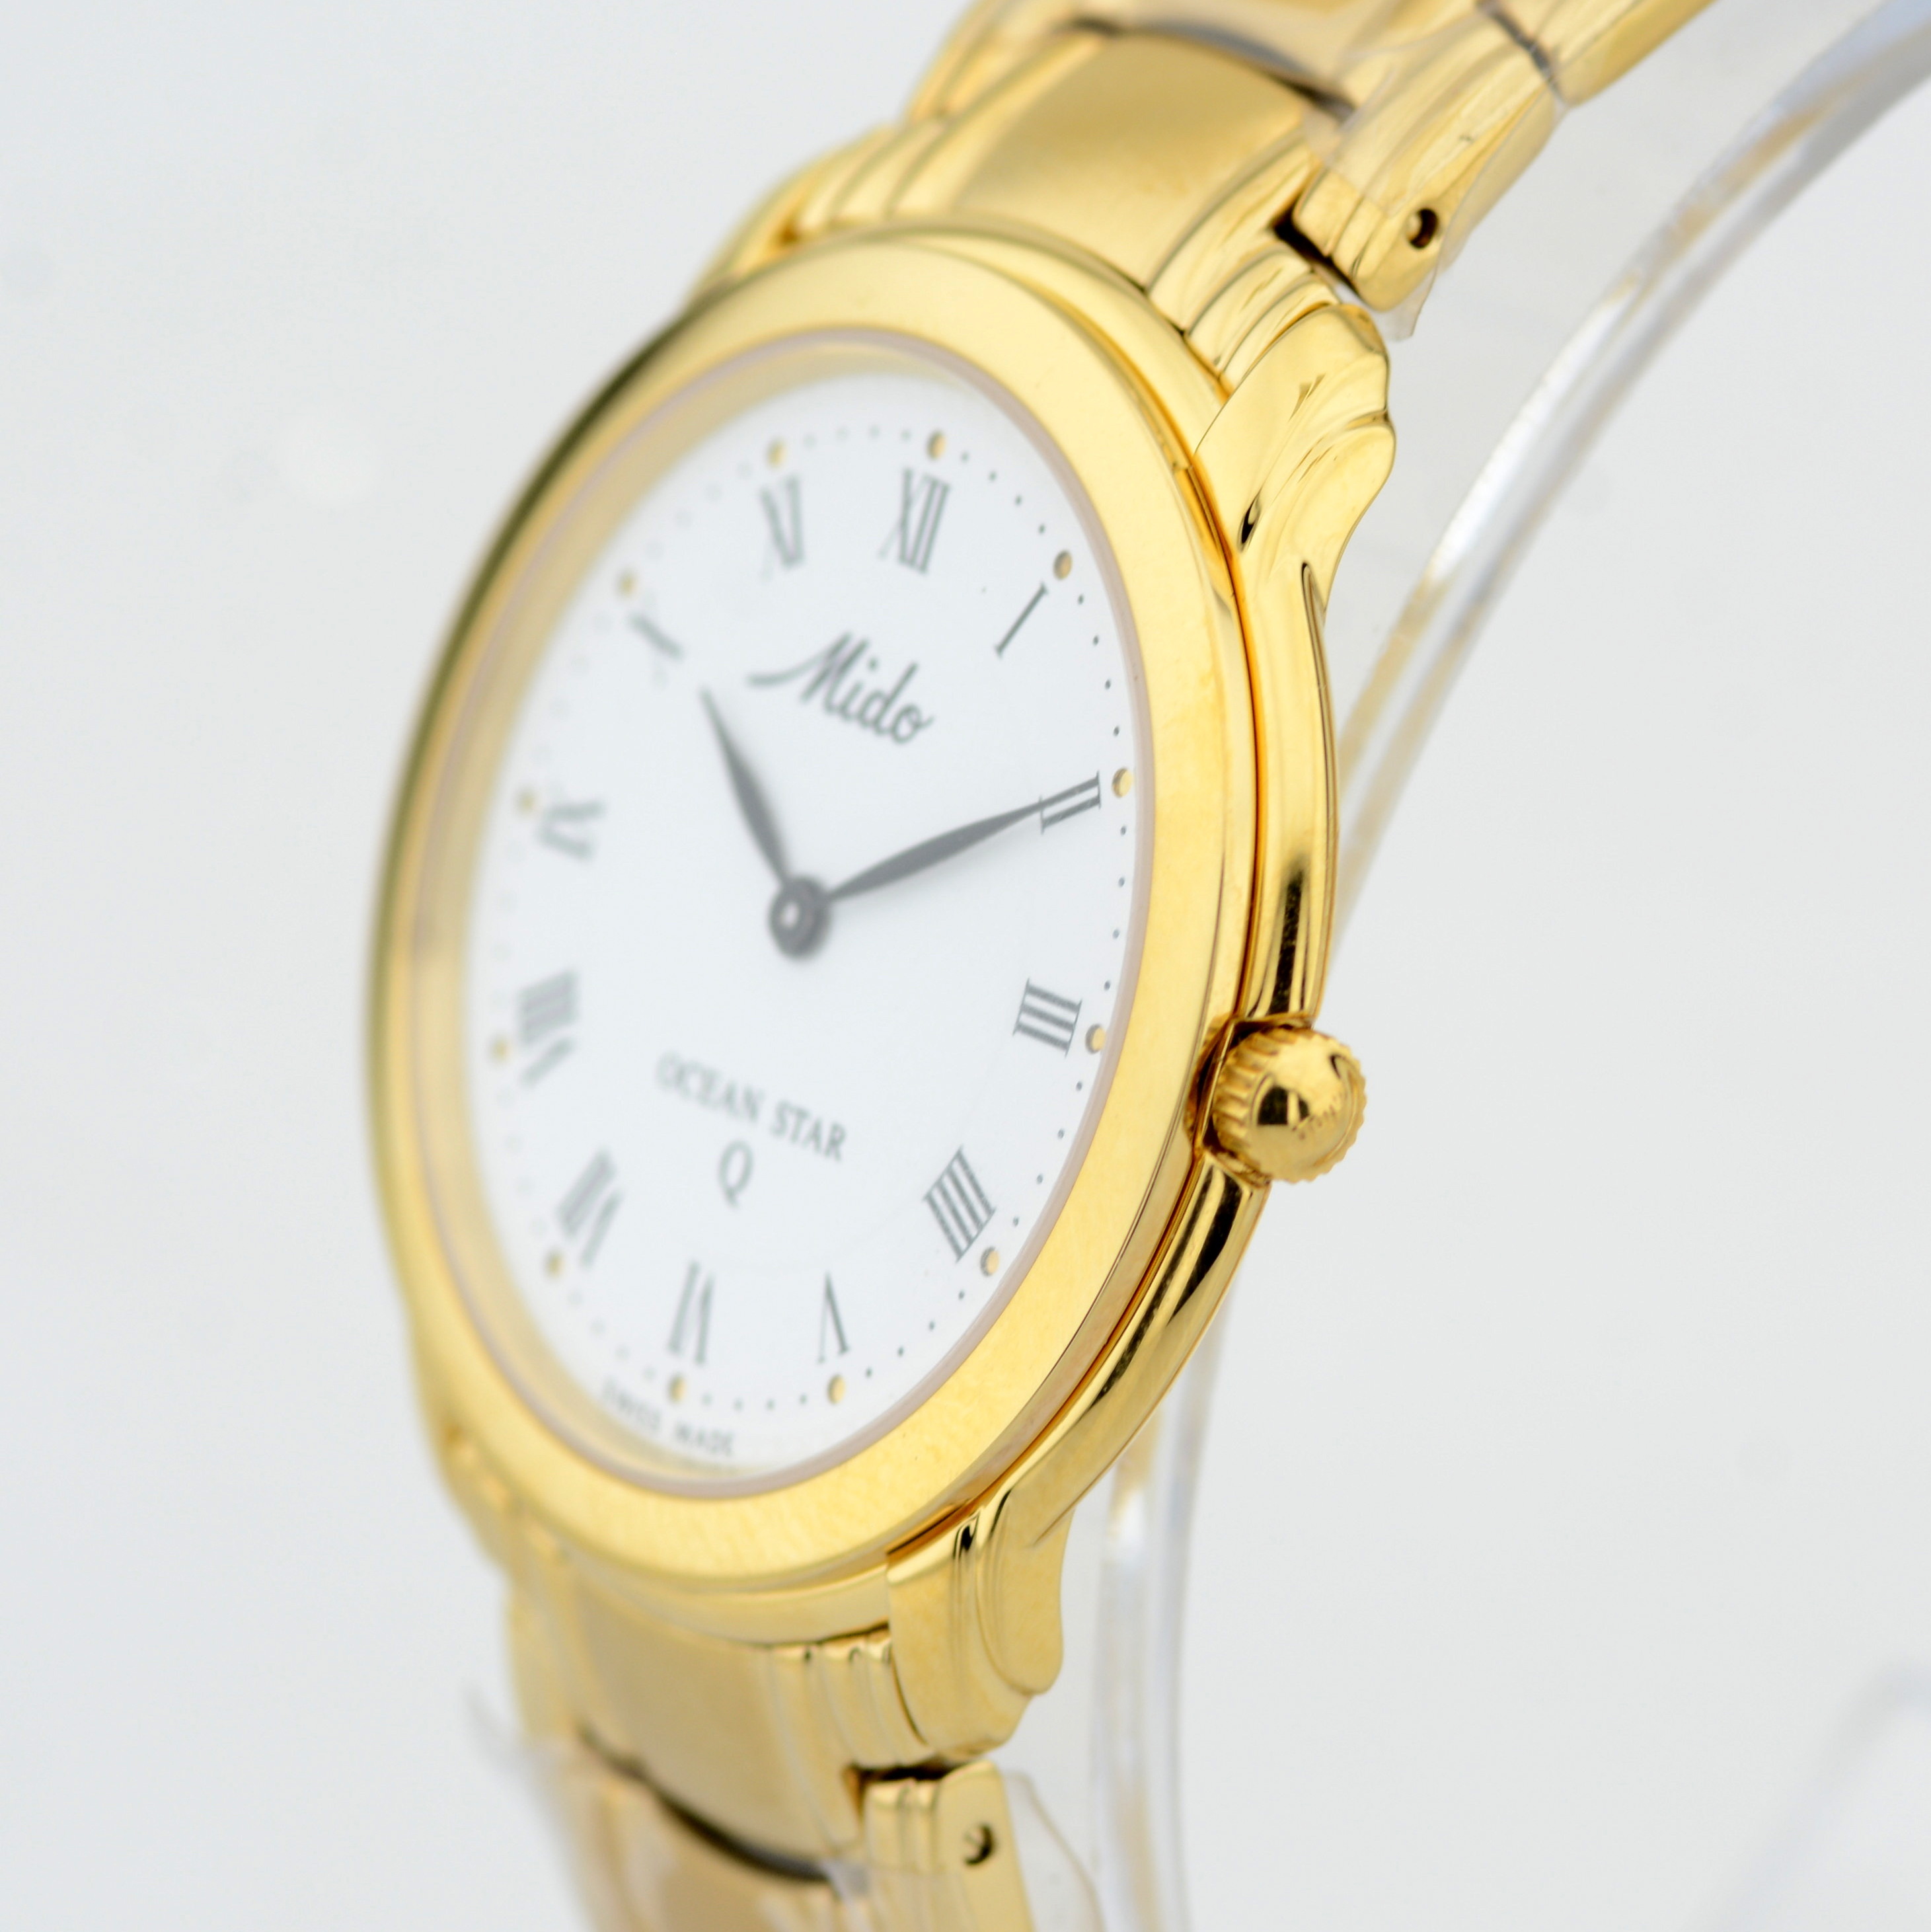 Mido / Ocean Star Automatic - (Unworn) Gentlmen's Gold-plated Wrist Watch - Image 4 of 7